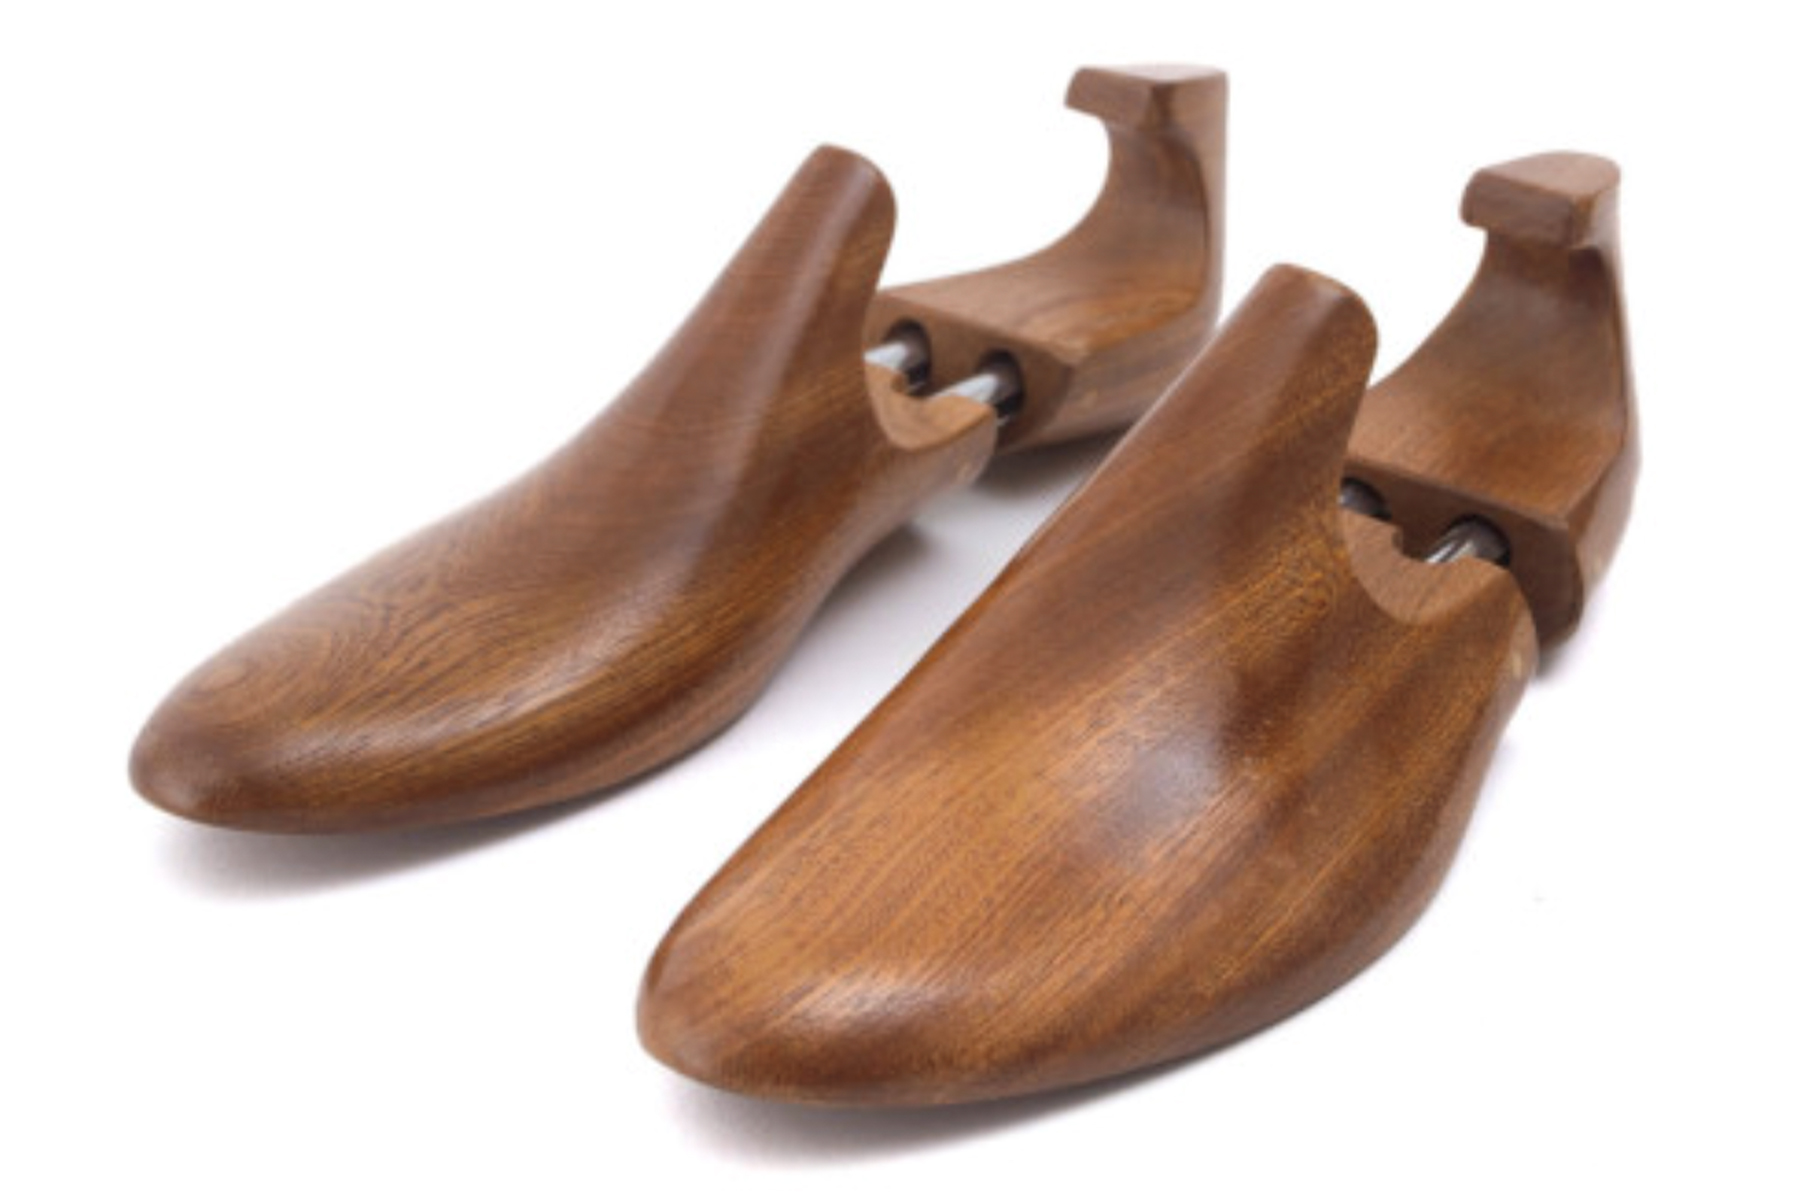 Hanger Project sapele wood shoe trees